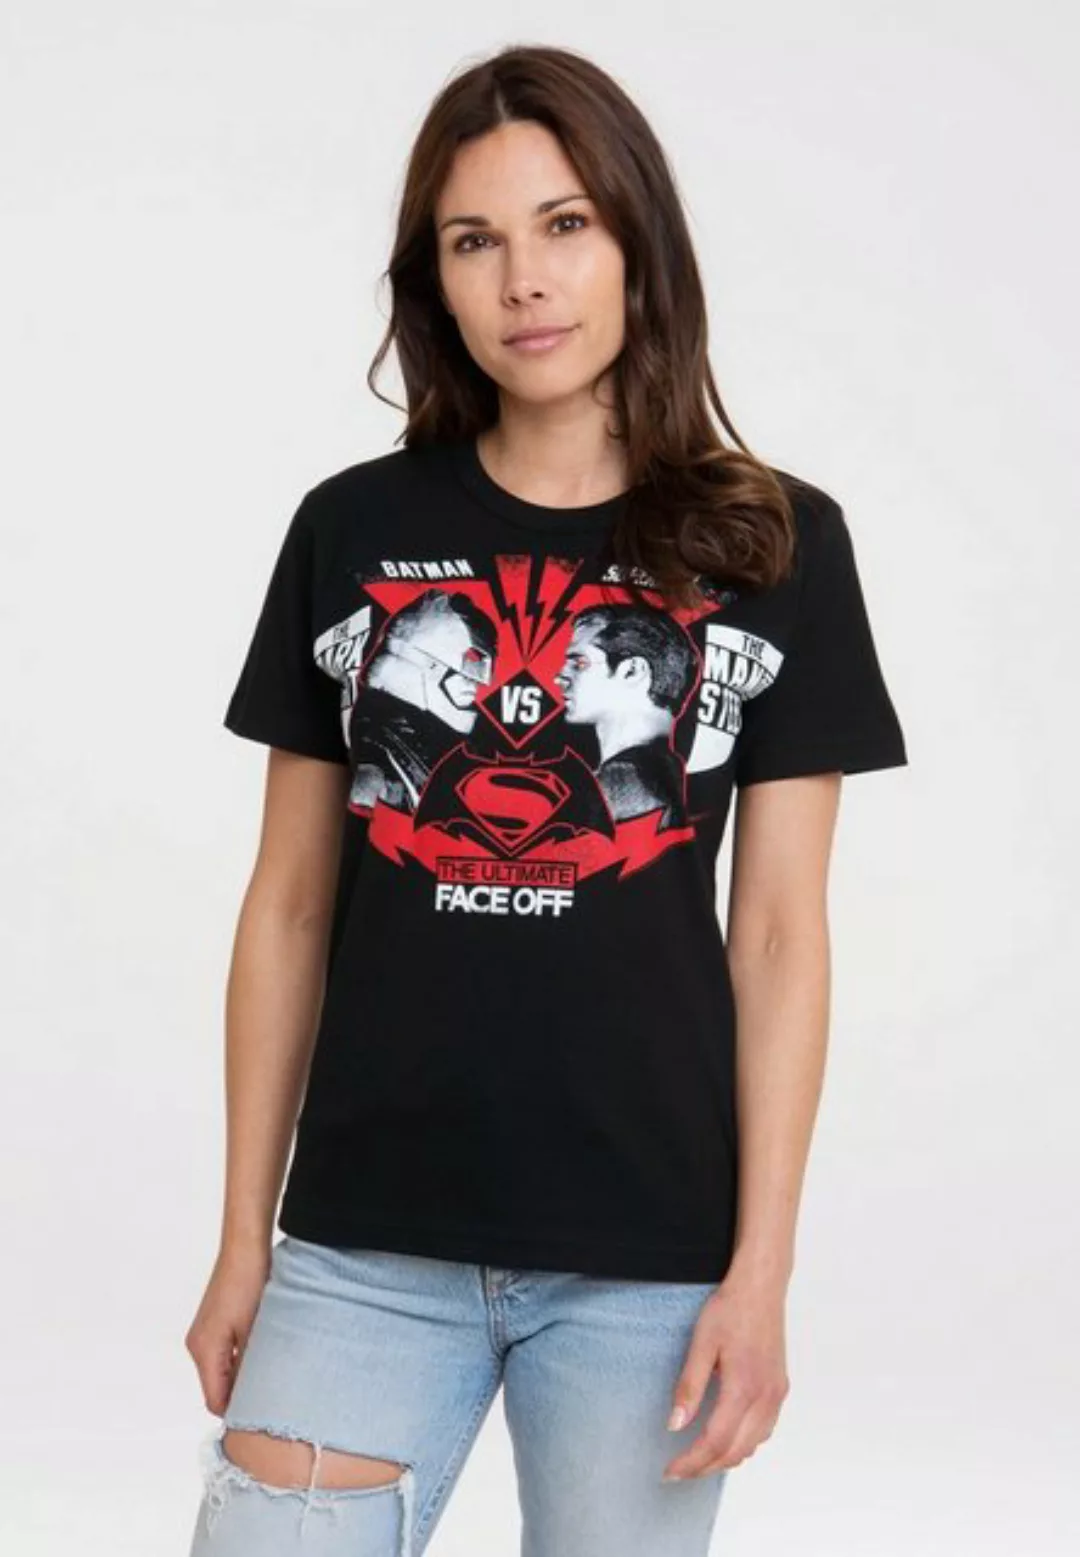 LOGOSHIRT T-Shirt Batman vs Superman - Face Off mit großem Superhelden-Prin günstig online kaufen